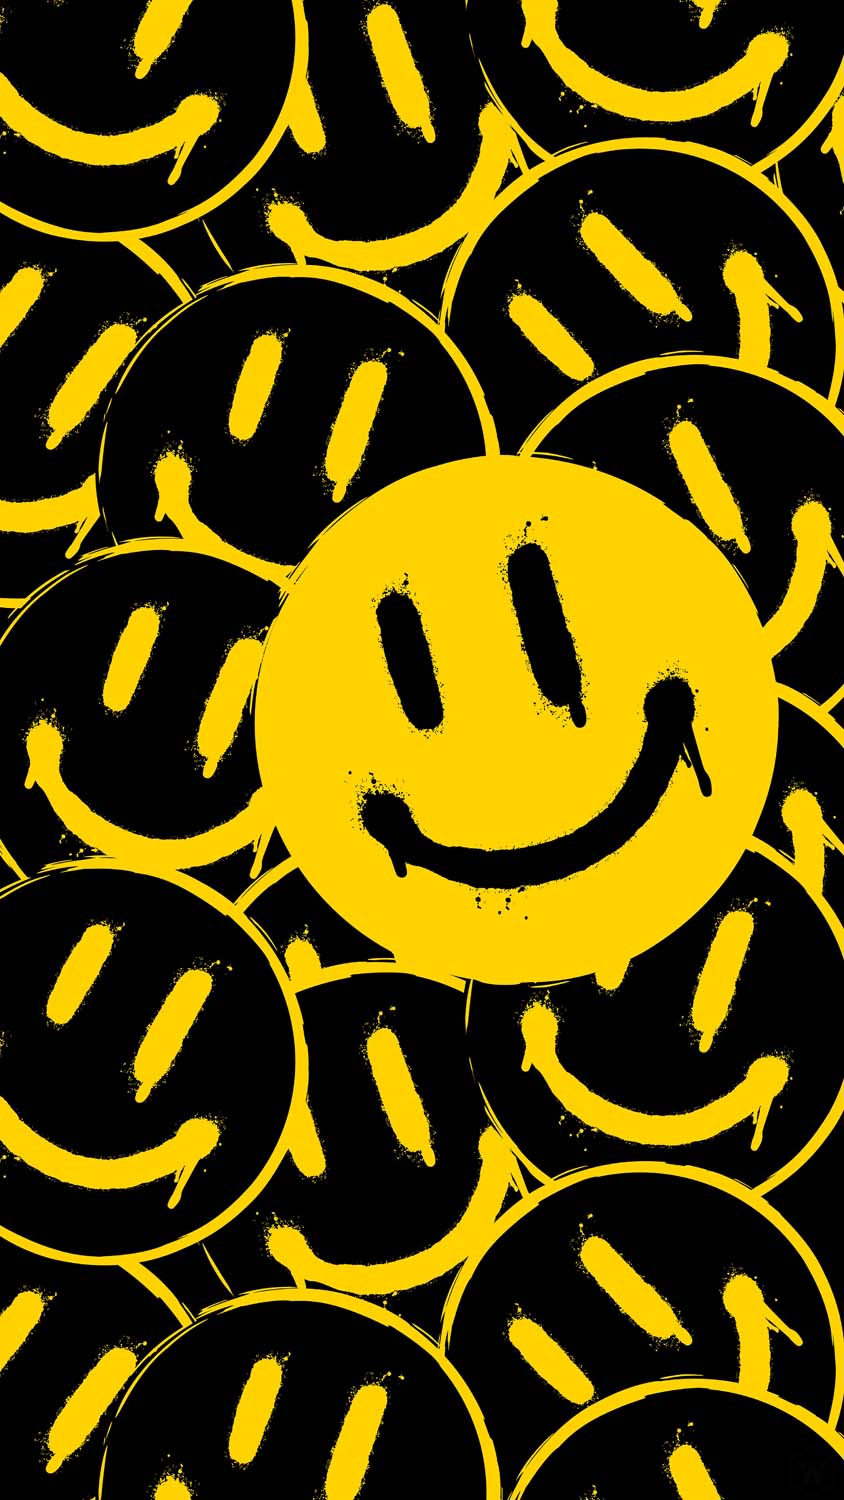 Emoji Smiley IPhone Wallpaper HD - IPhone Wallpapers : iPhone Wallpapers